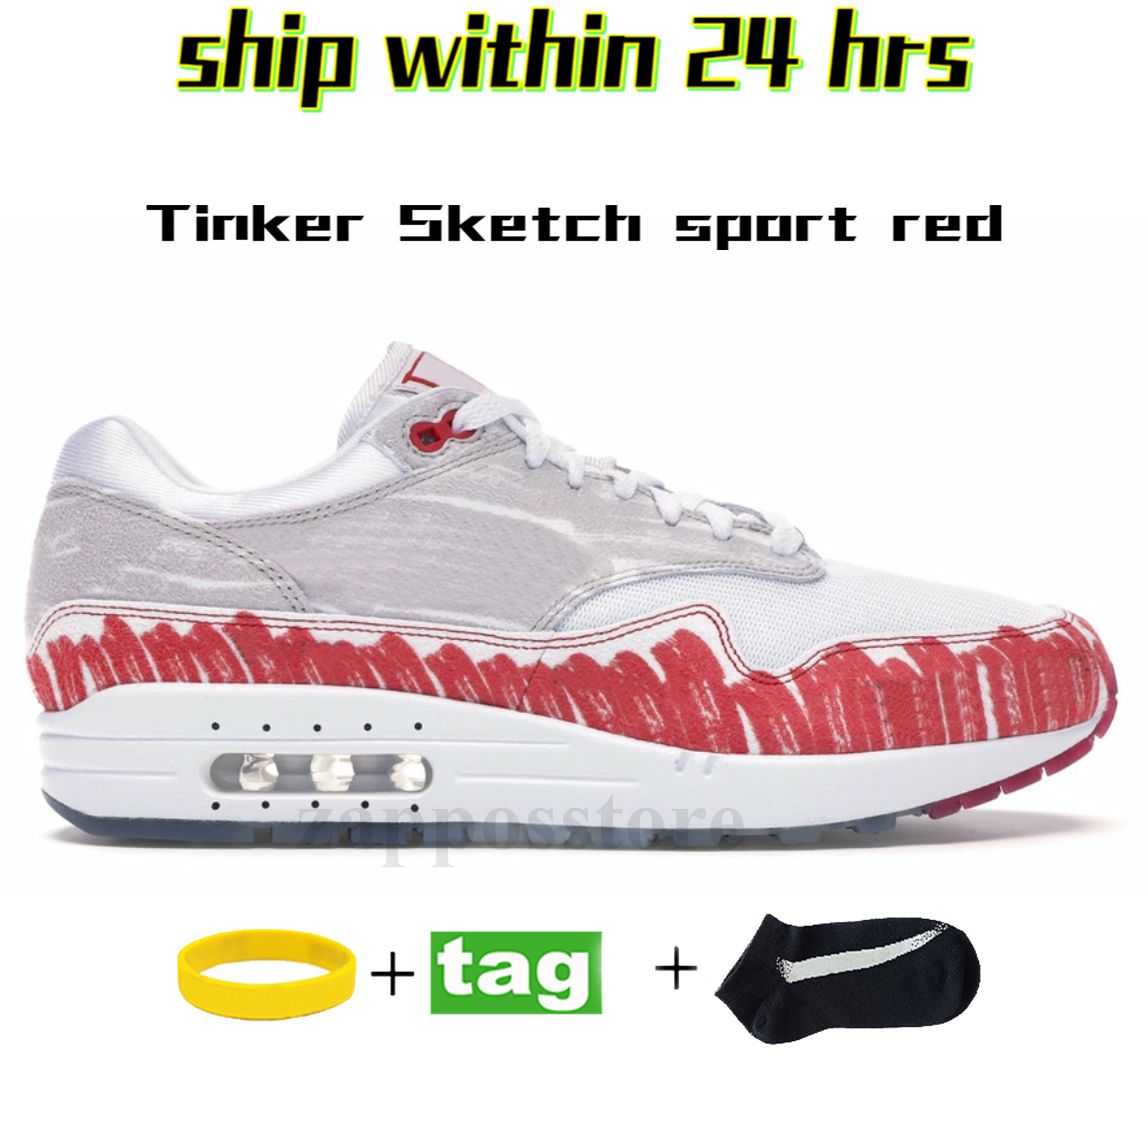 34 40-45 Tinker Sketch Sport Red